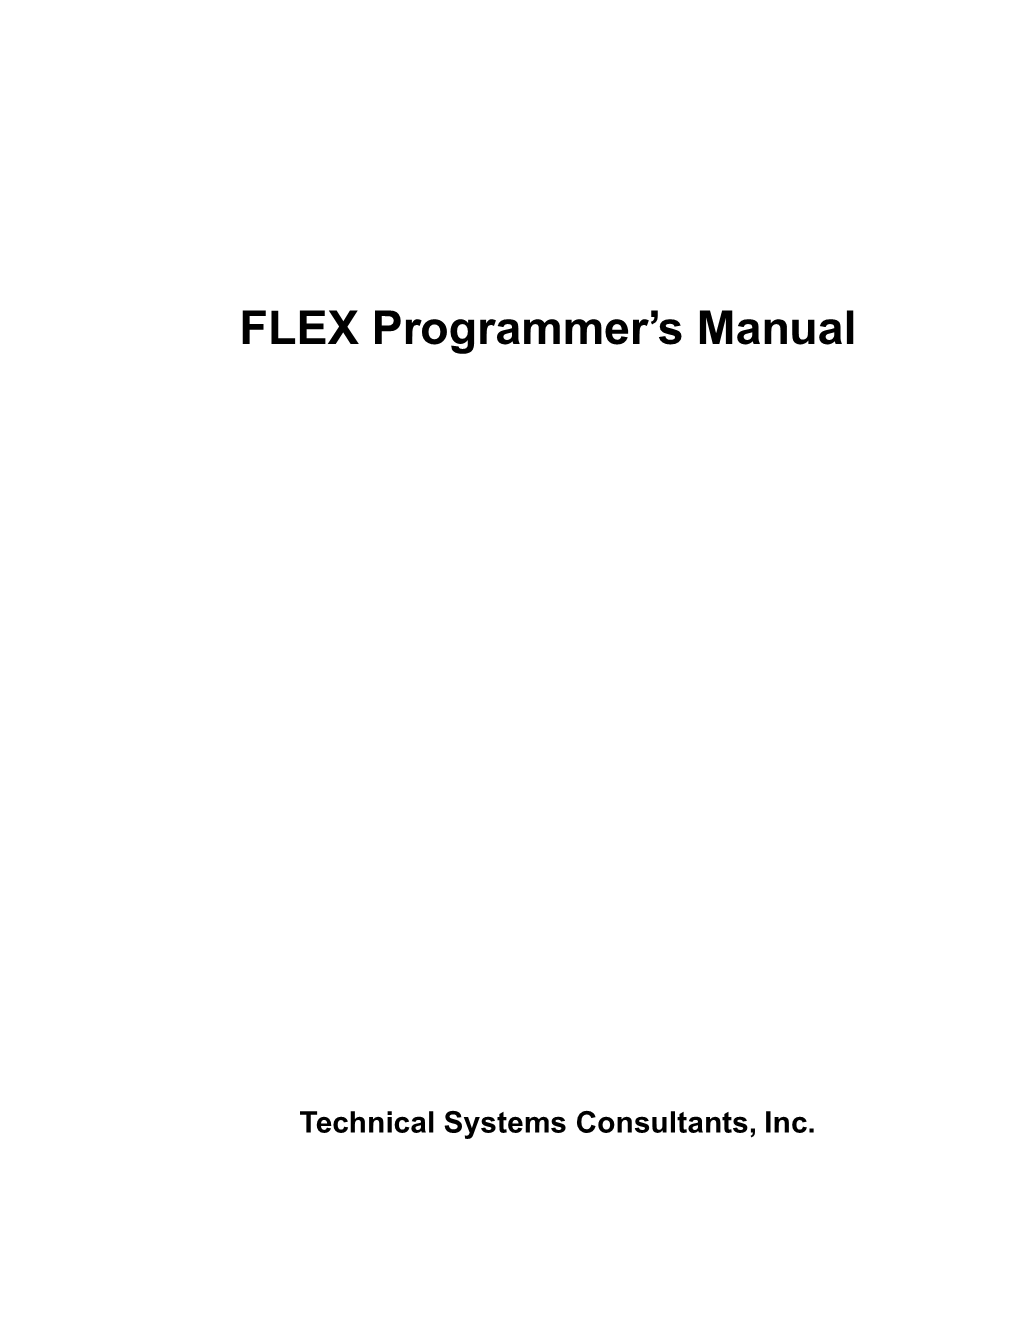 FLEX Programmer's Manual